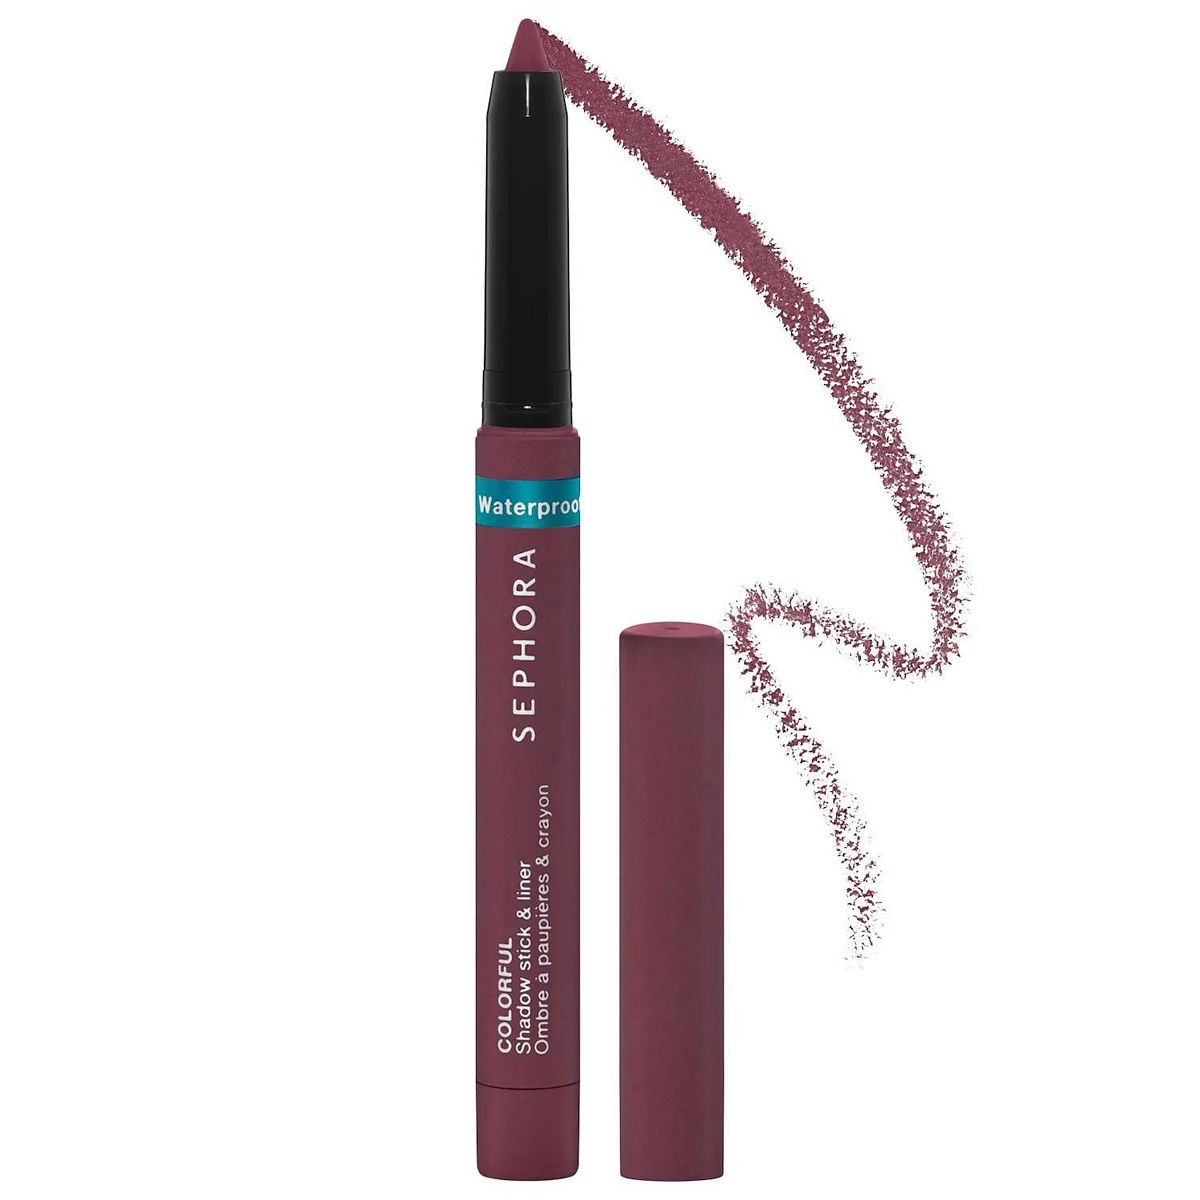 SEPHORA COLLECTION Sephora Colorful Waterproof Eyeshadow & Eyeliner Multi-Stick | Kohl's